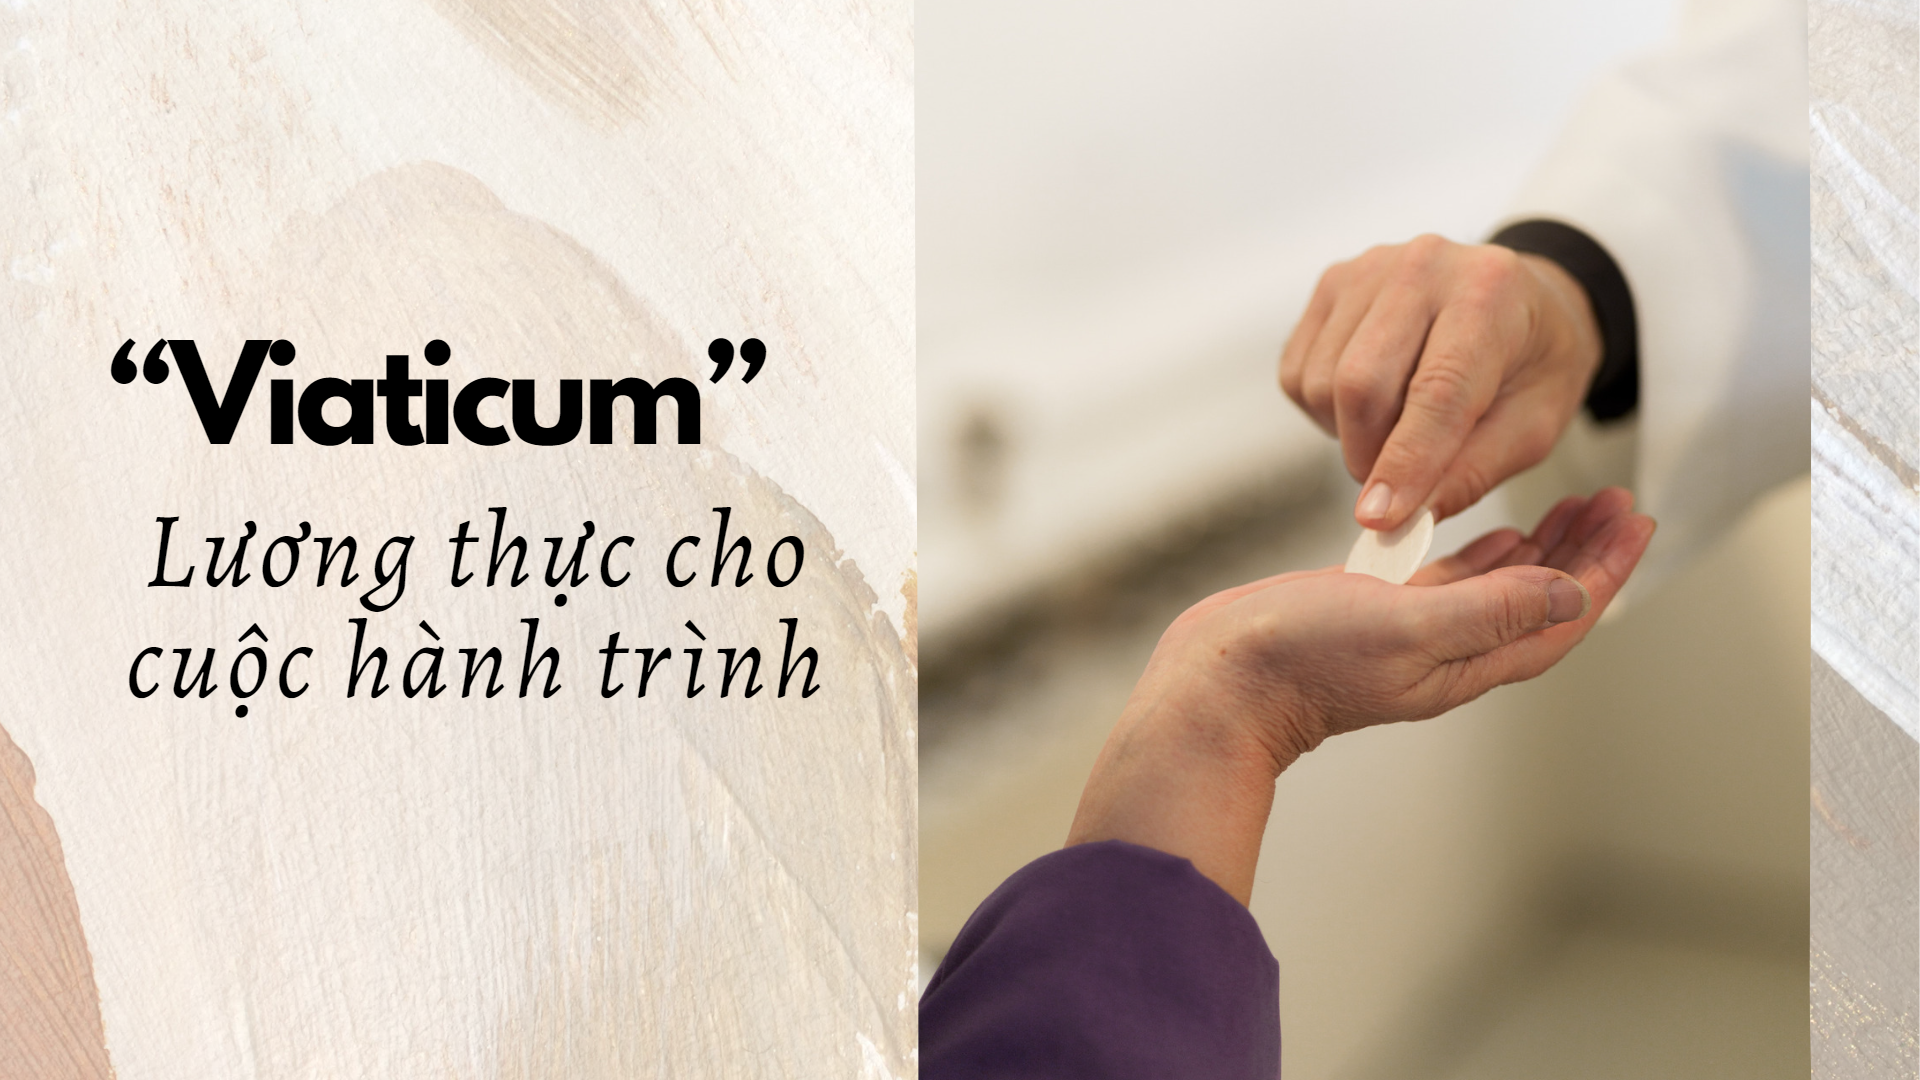 “viaticum” luong thuc cho cuoc hanh trinh